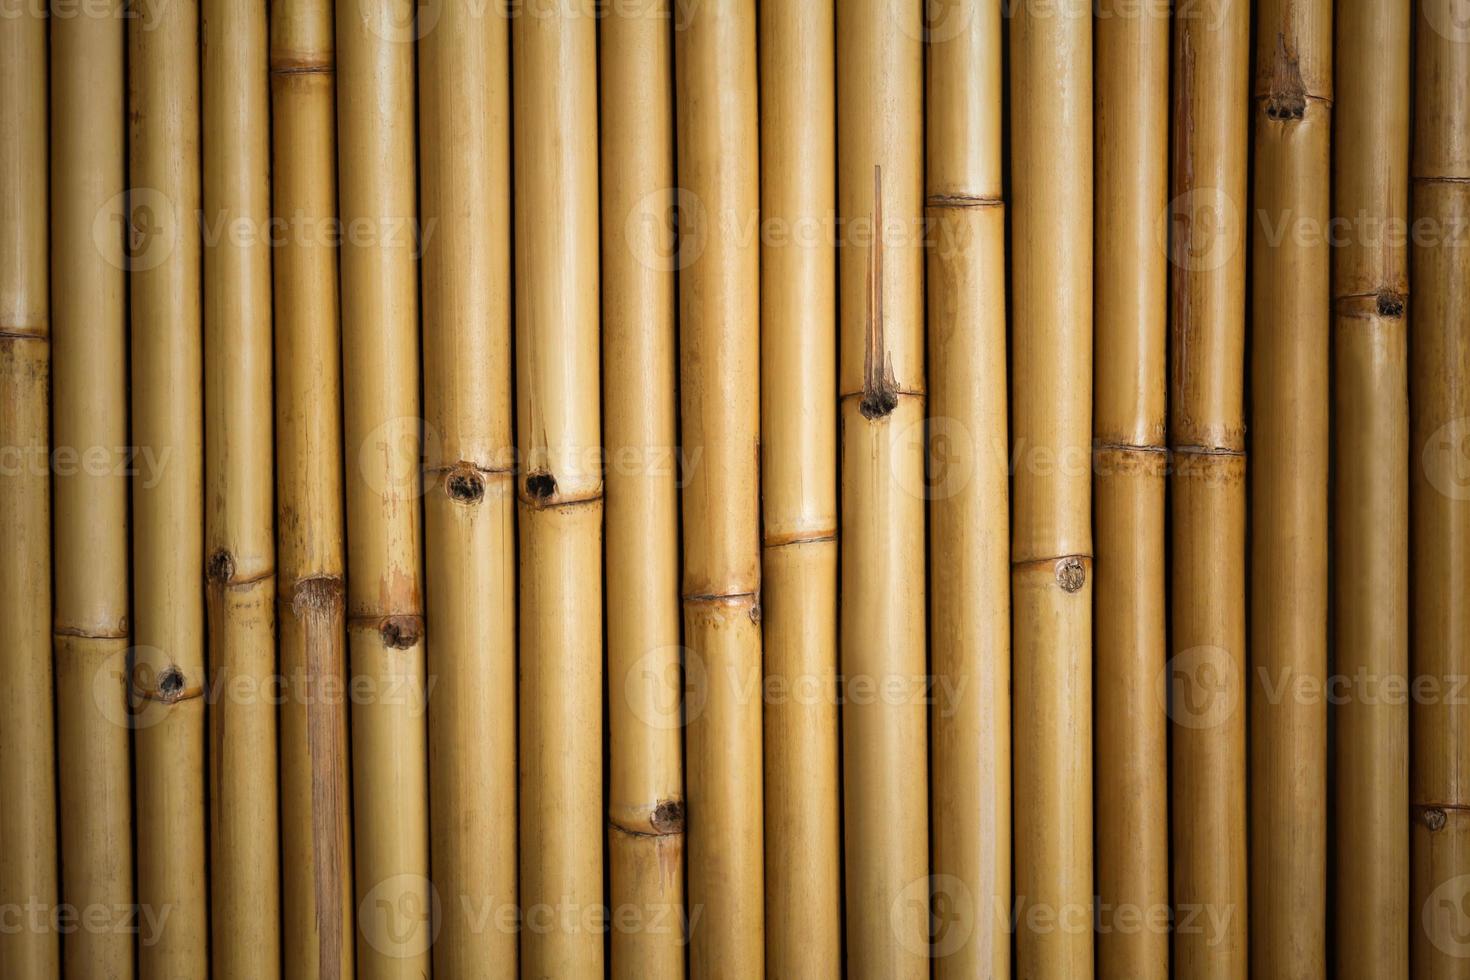 close up Bamboo background photo